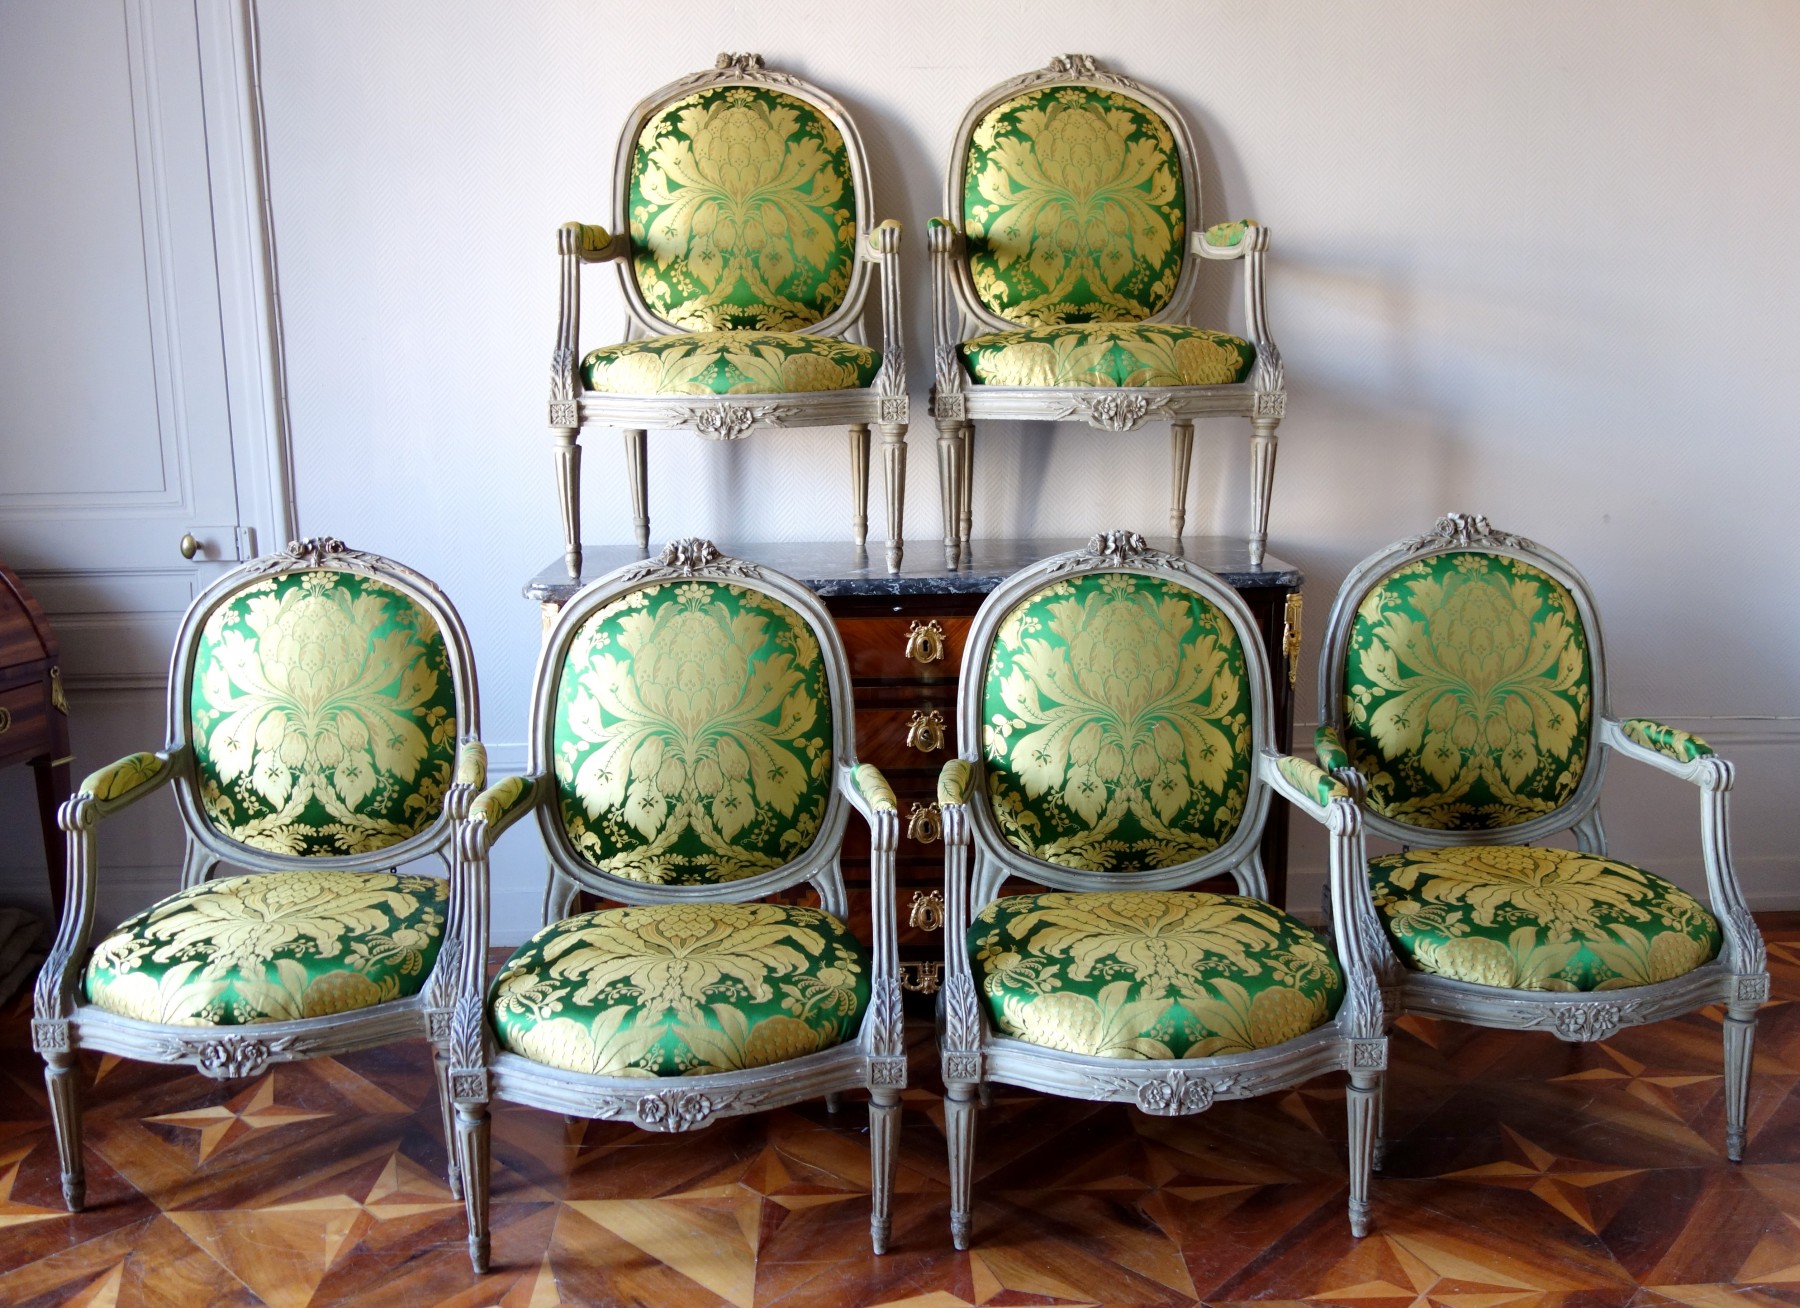 Louis XVI style furniture